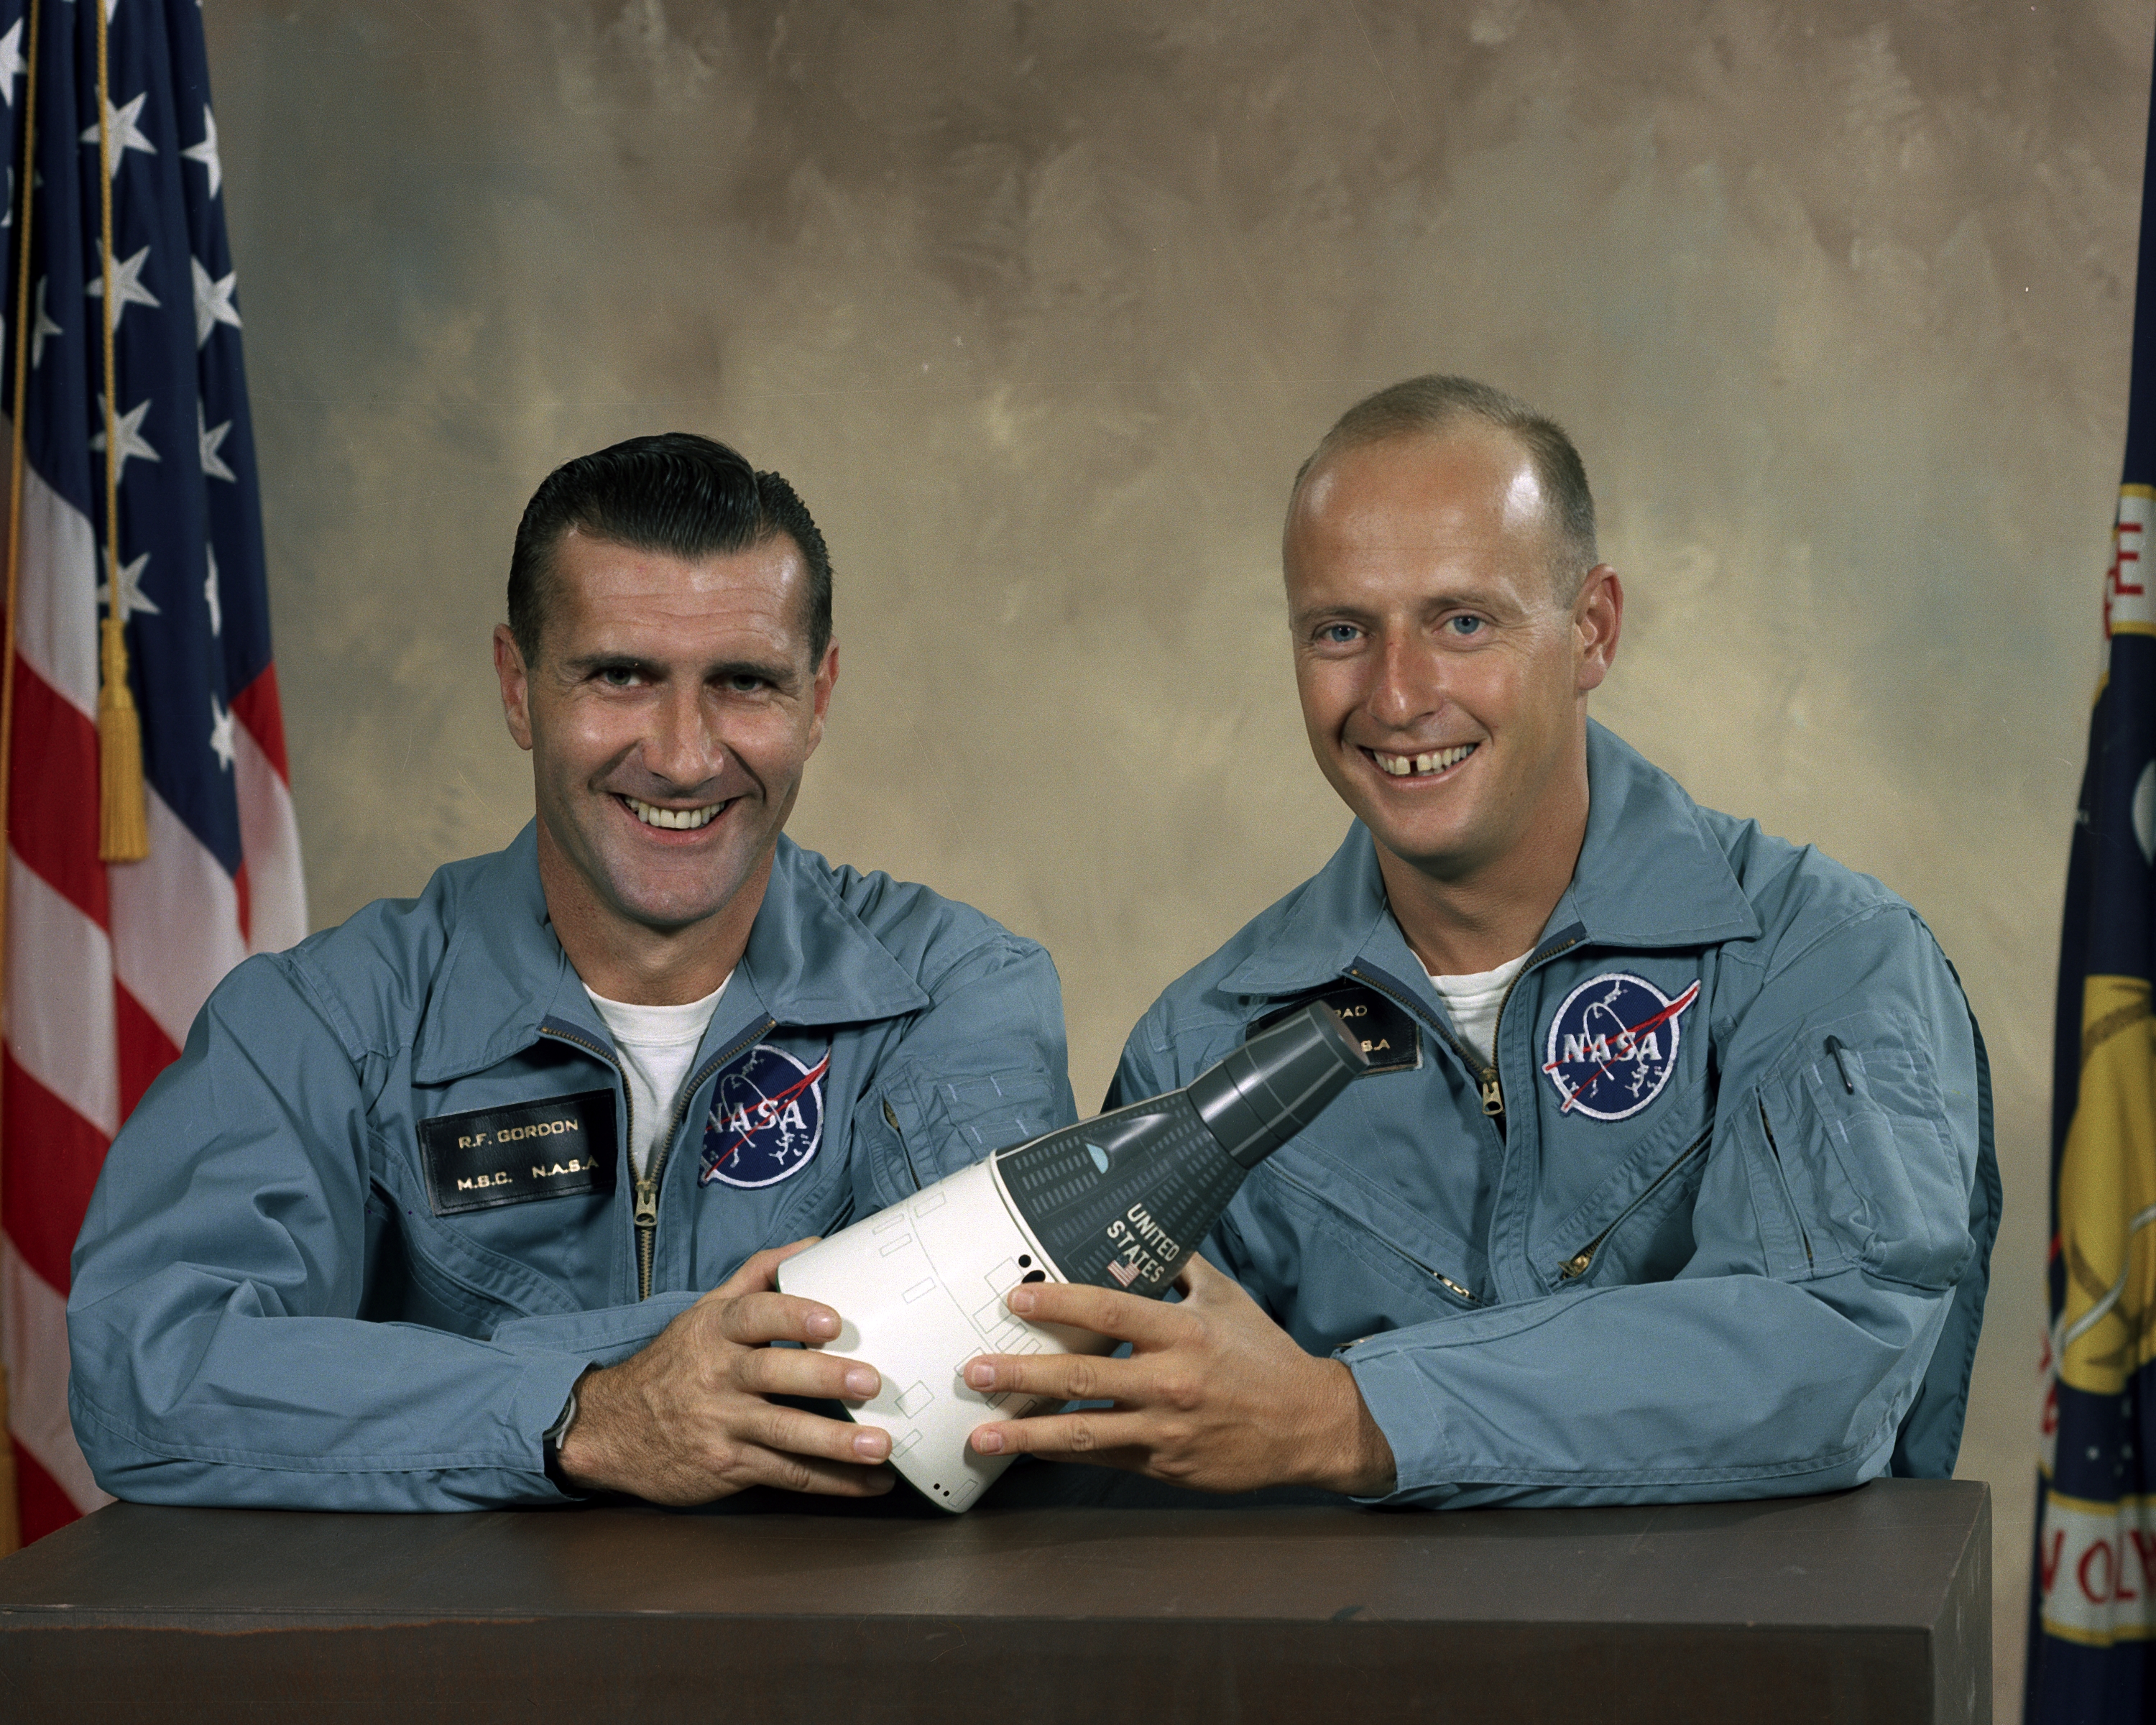 Gemini 11 prime crew (Gordon and Conrad)